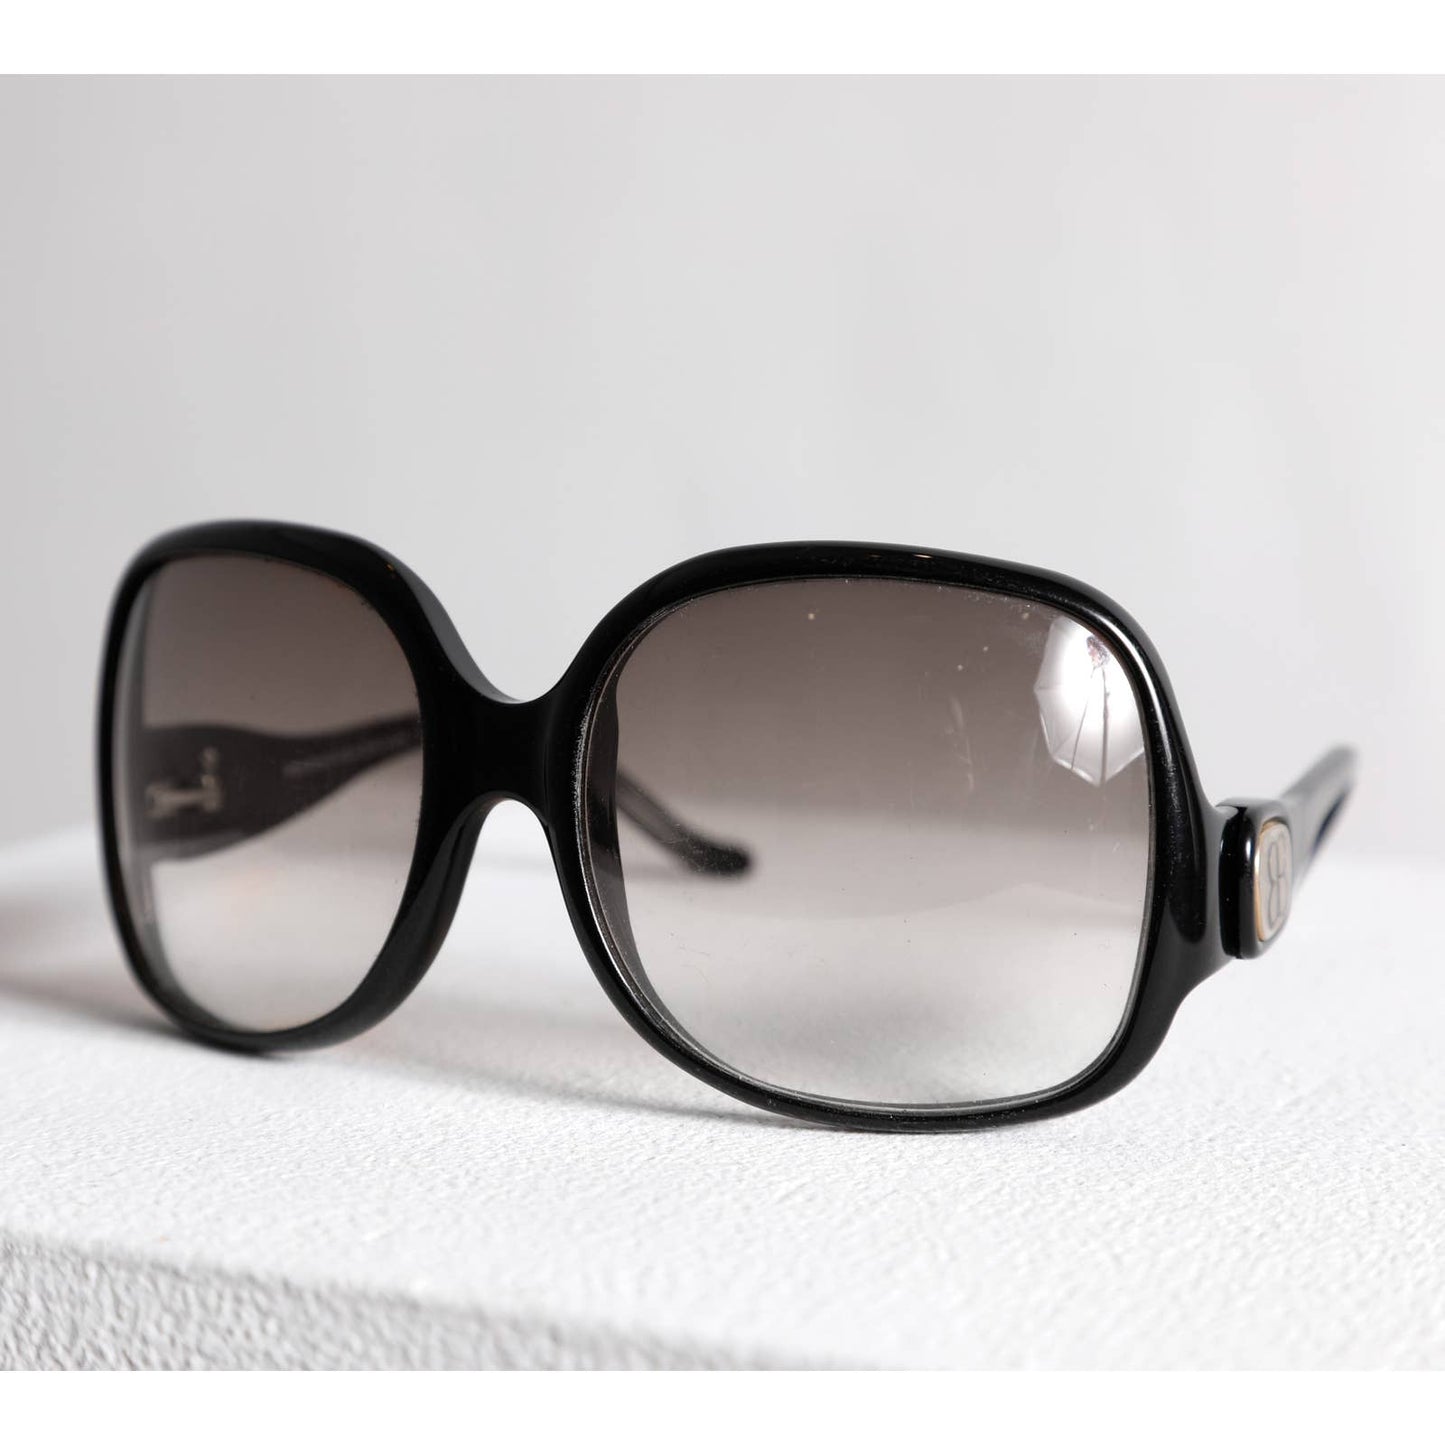 BALENCIAGA Black Framed Retro Style Sunglasses